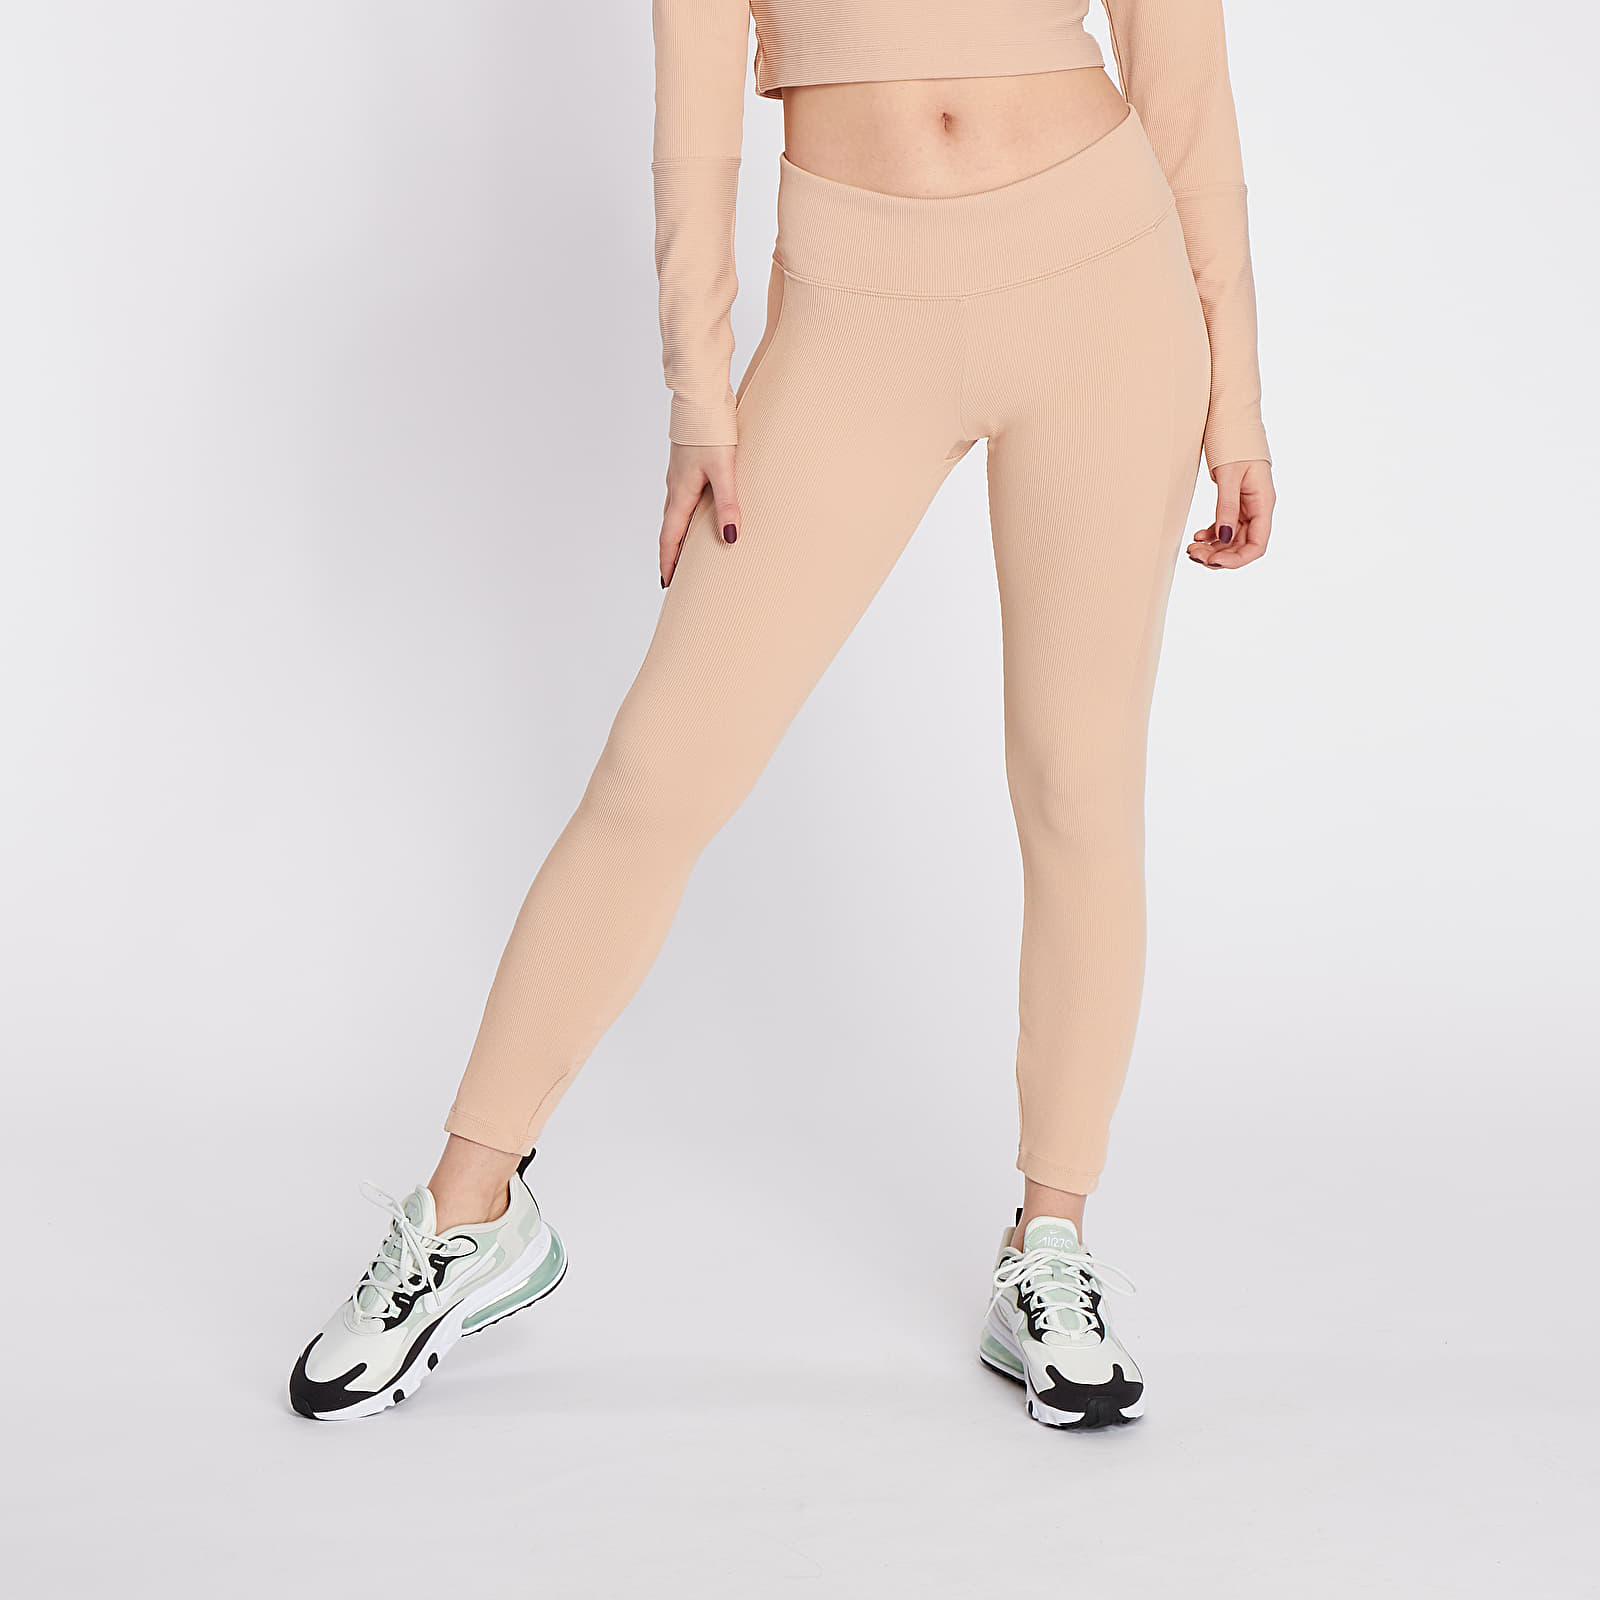 Nike Air Ribbed light beige high waisted leggings